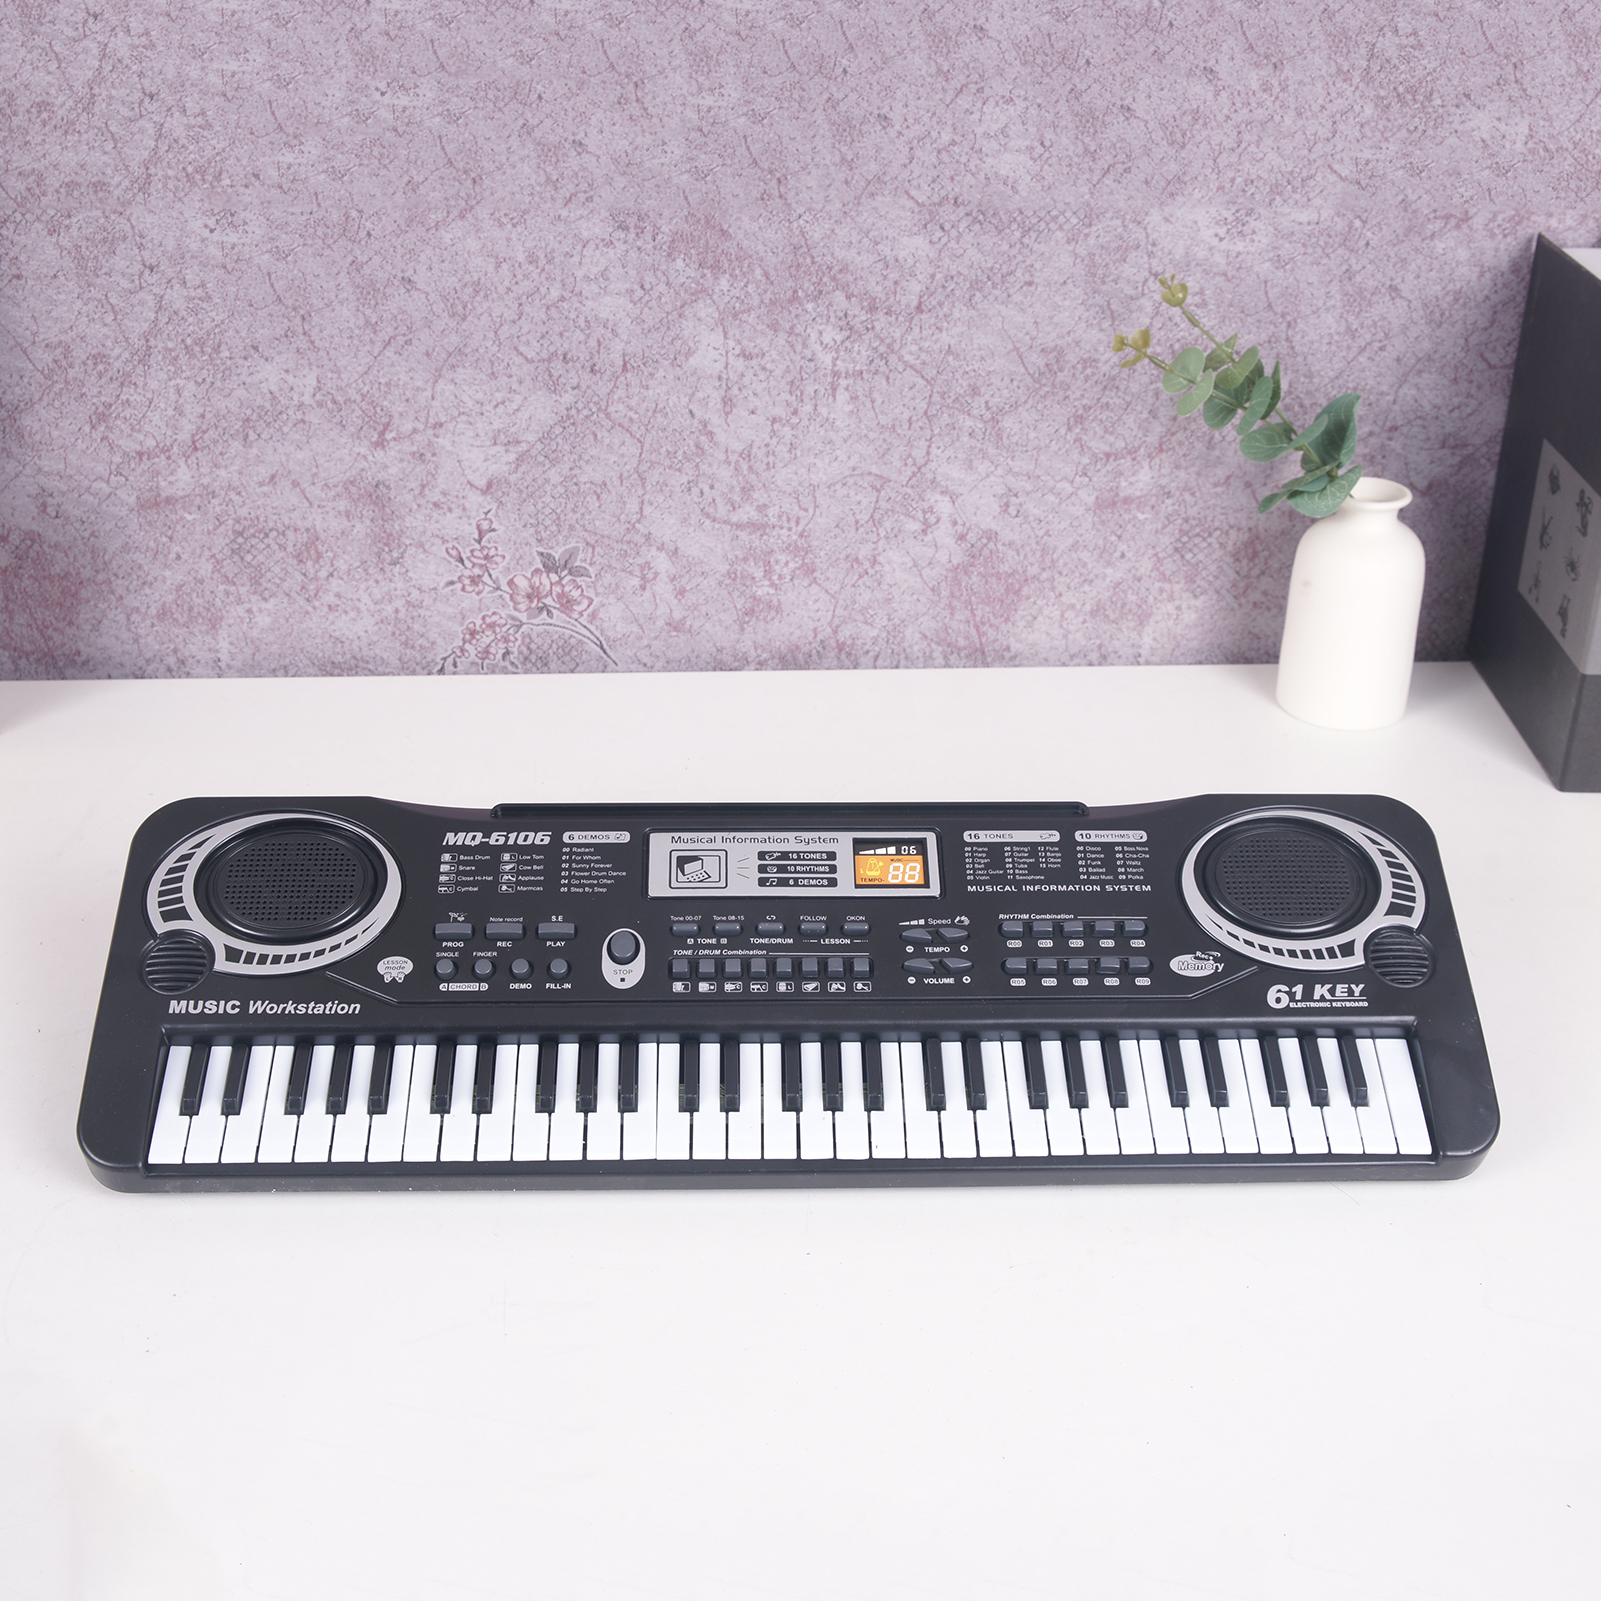 Anself 61 Keys Black Digital Music Electronic Keyboard KeyBoard Electric Piano Gift Musical Instrument - image 2 of 7